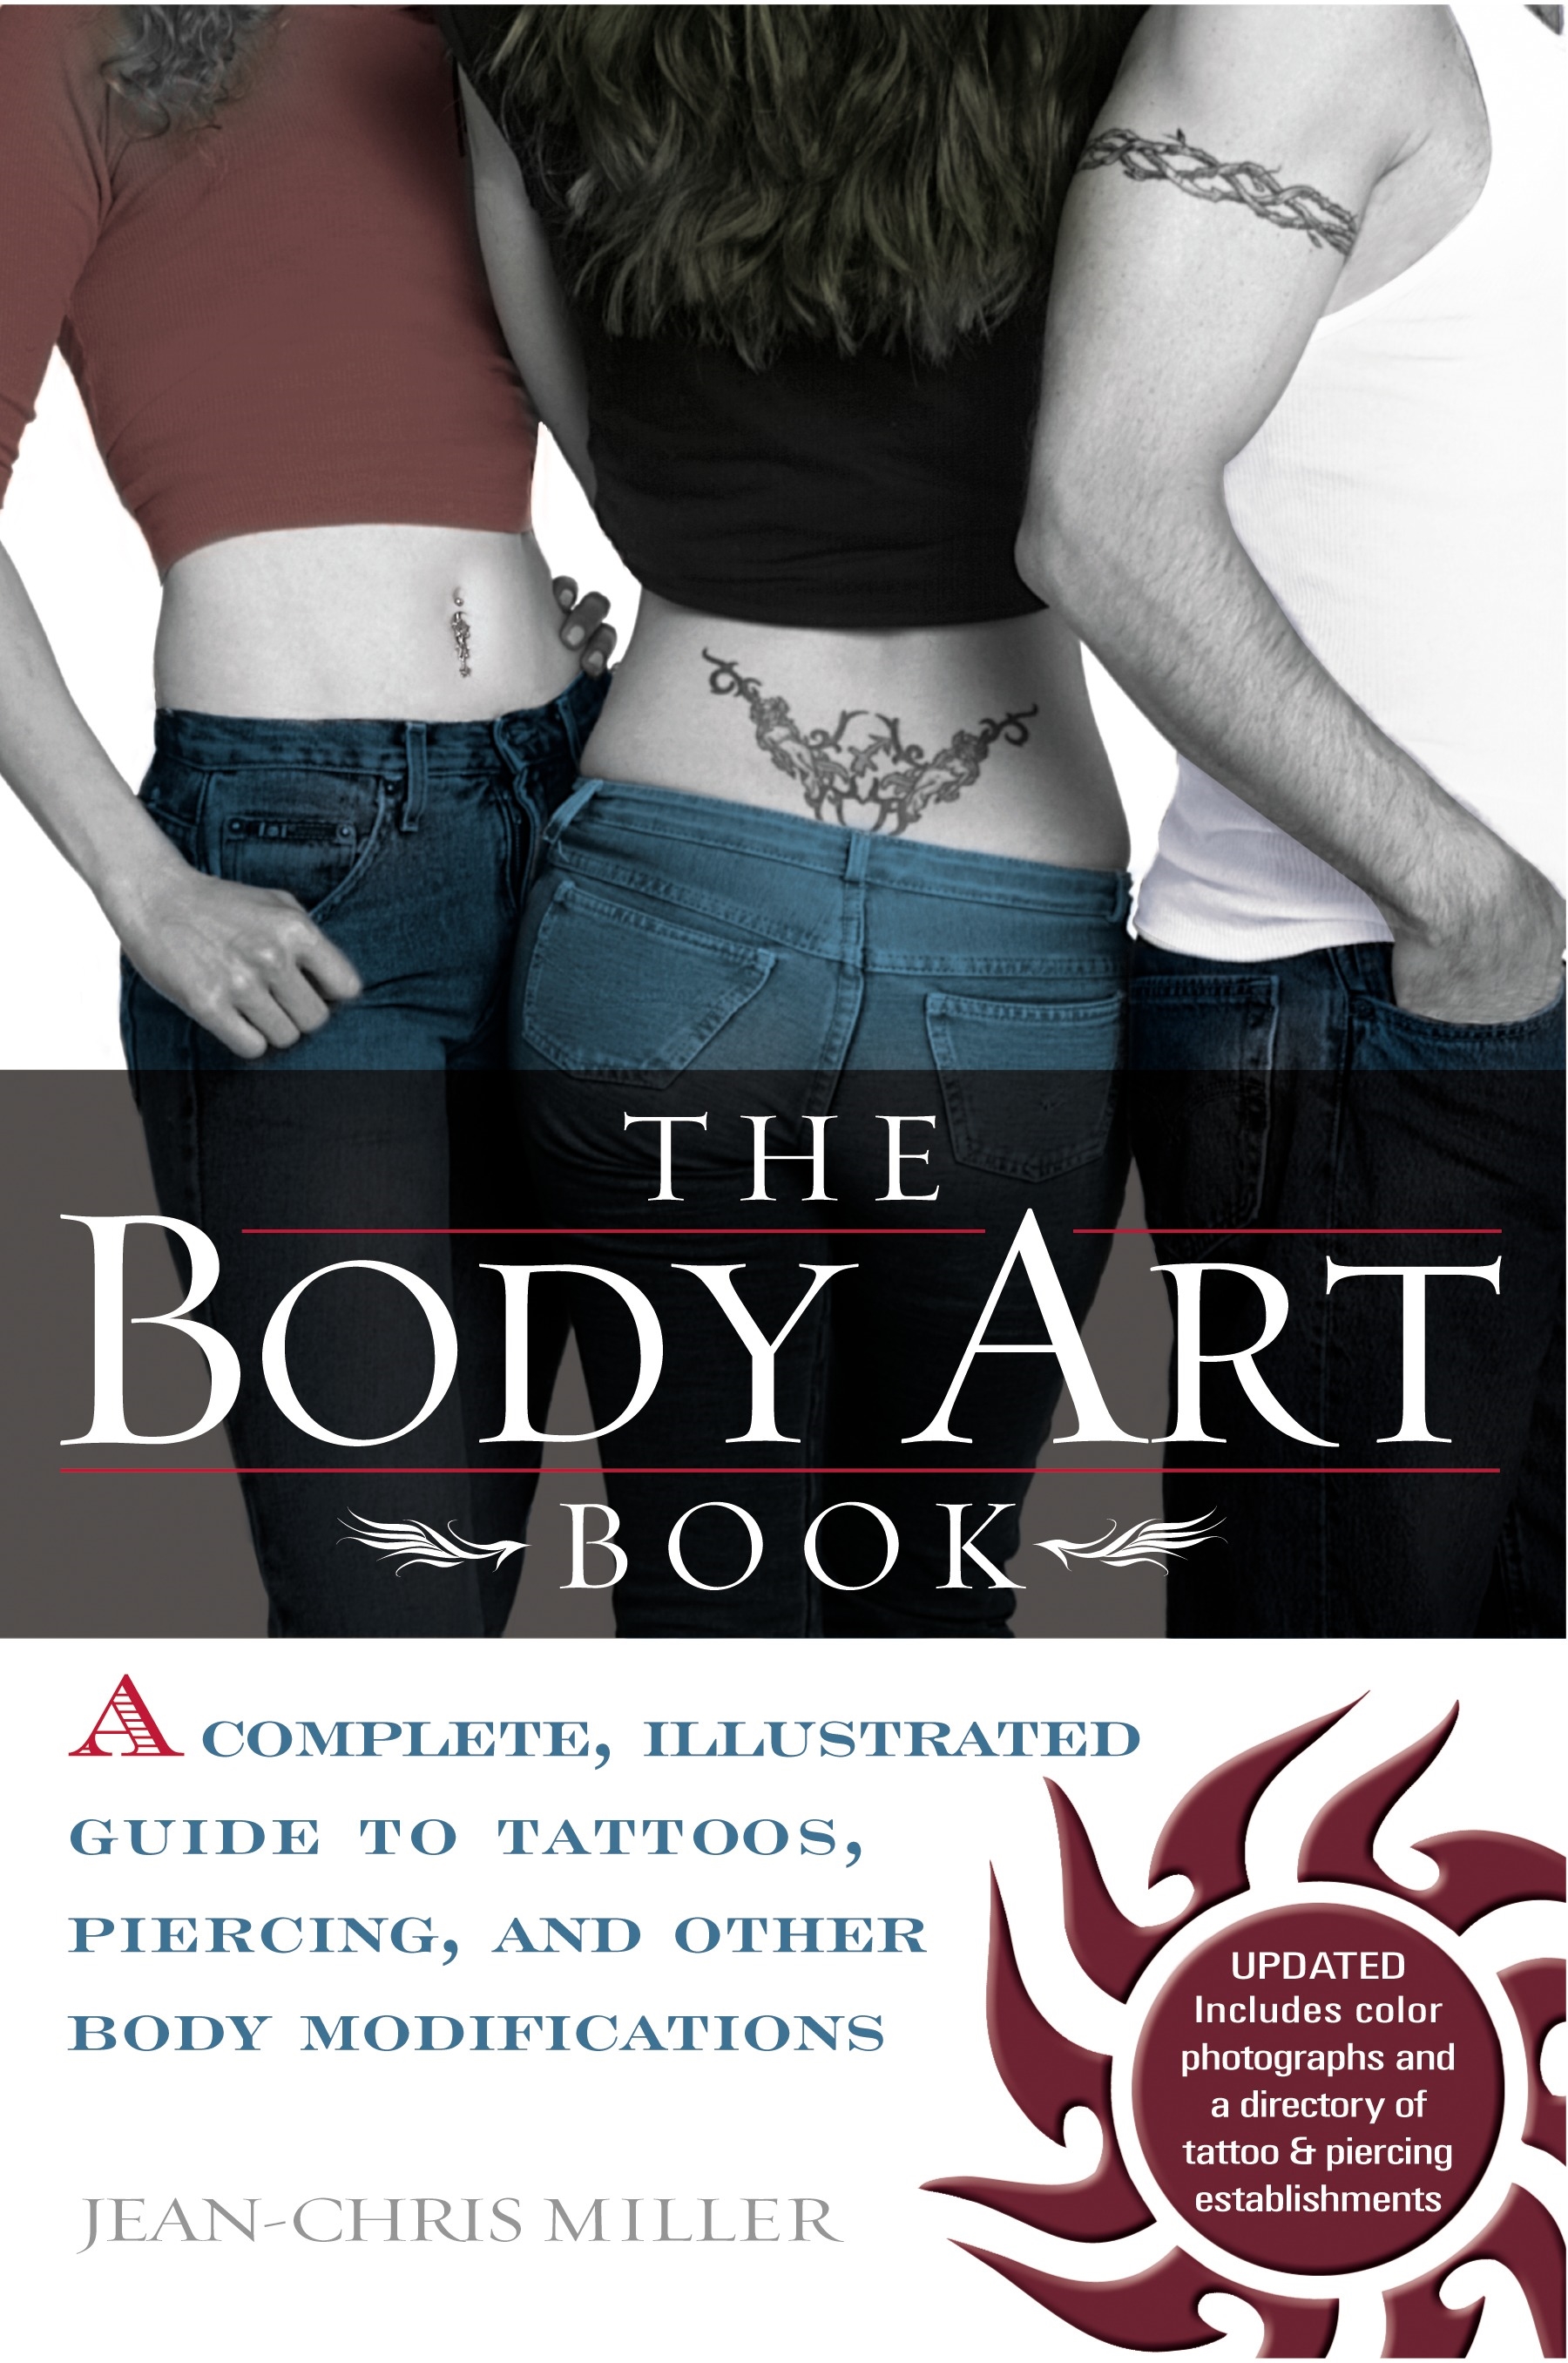 The Body Art Book by Jean-Chris Miller - Penguin Books New Zealand